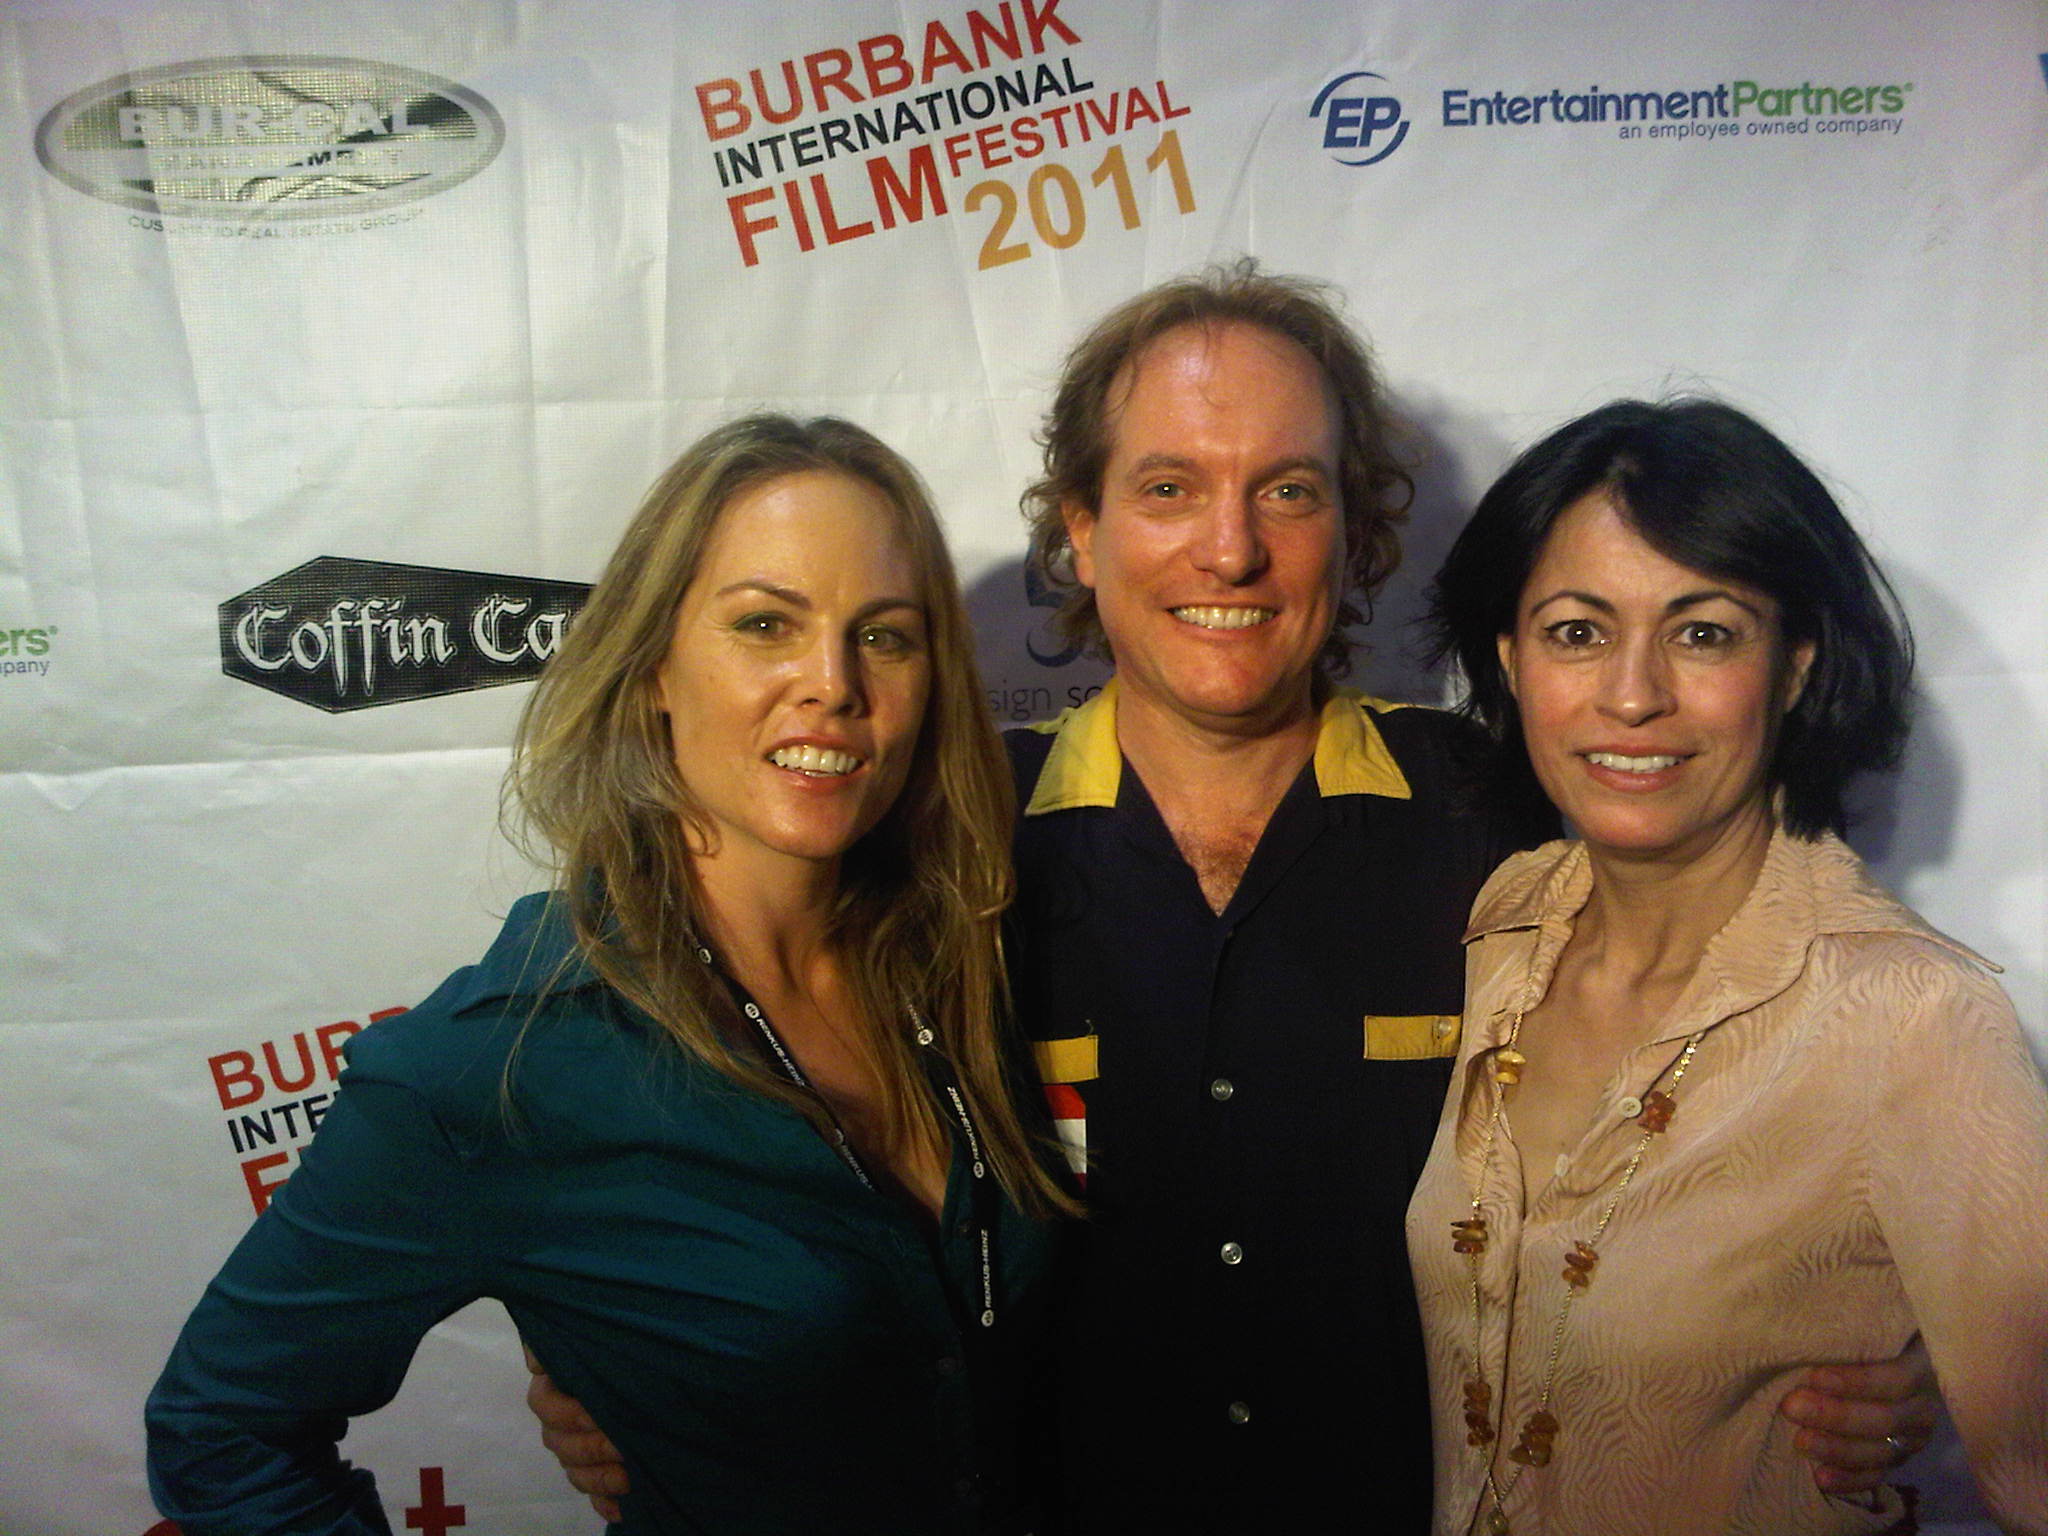 Filmmakers Nicholas Goodman and Hortensia Goodman at the 2011 Burbank International Film Festival